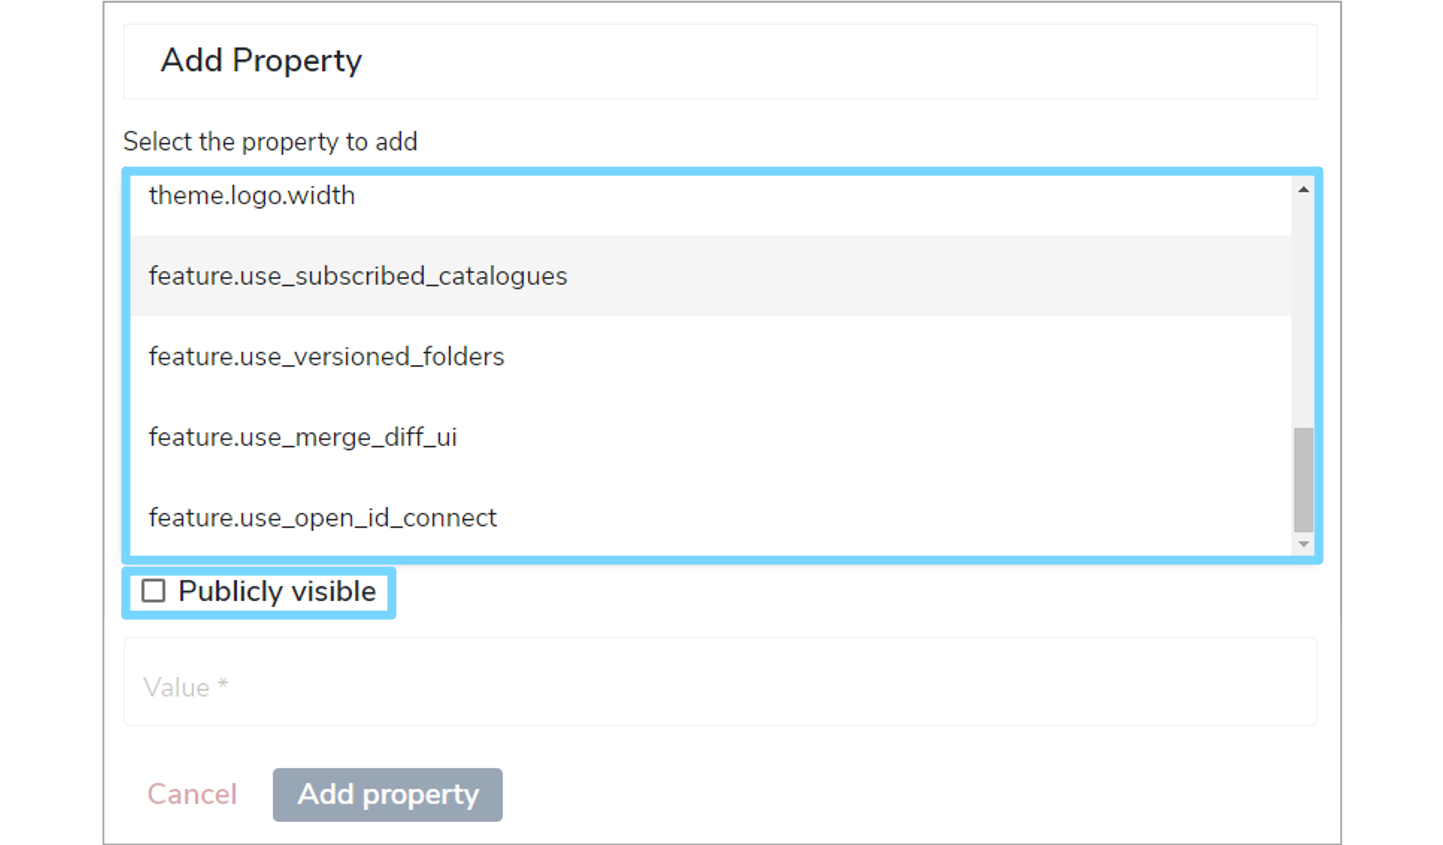 Add property dropdown menu on Add Property form